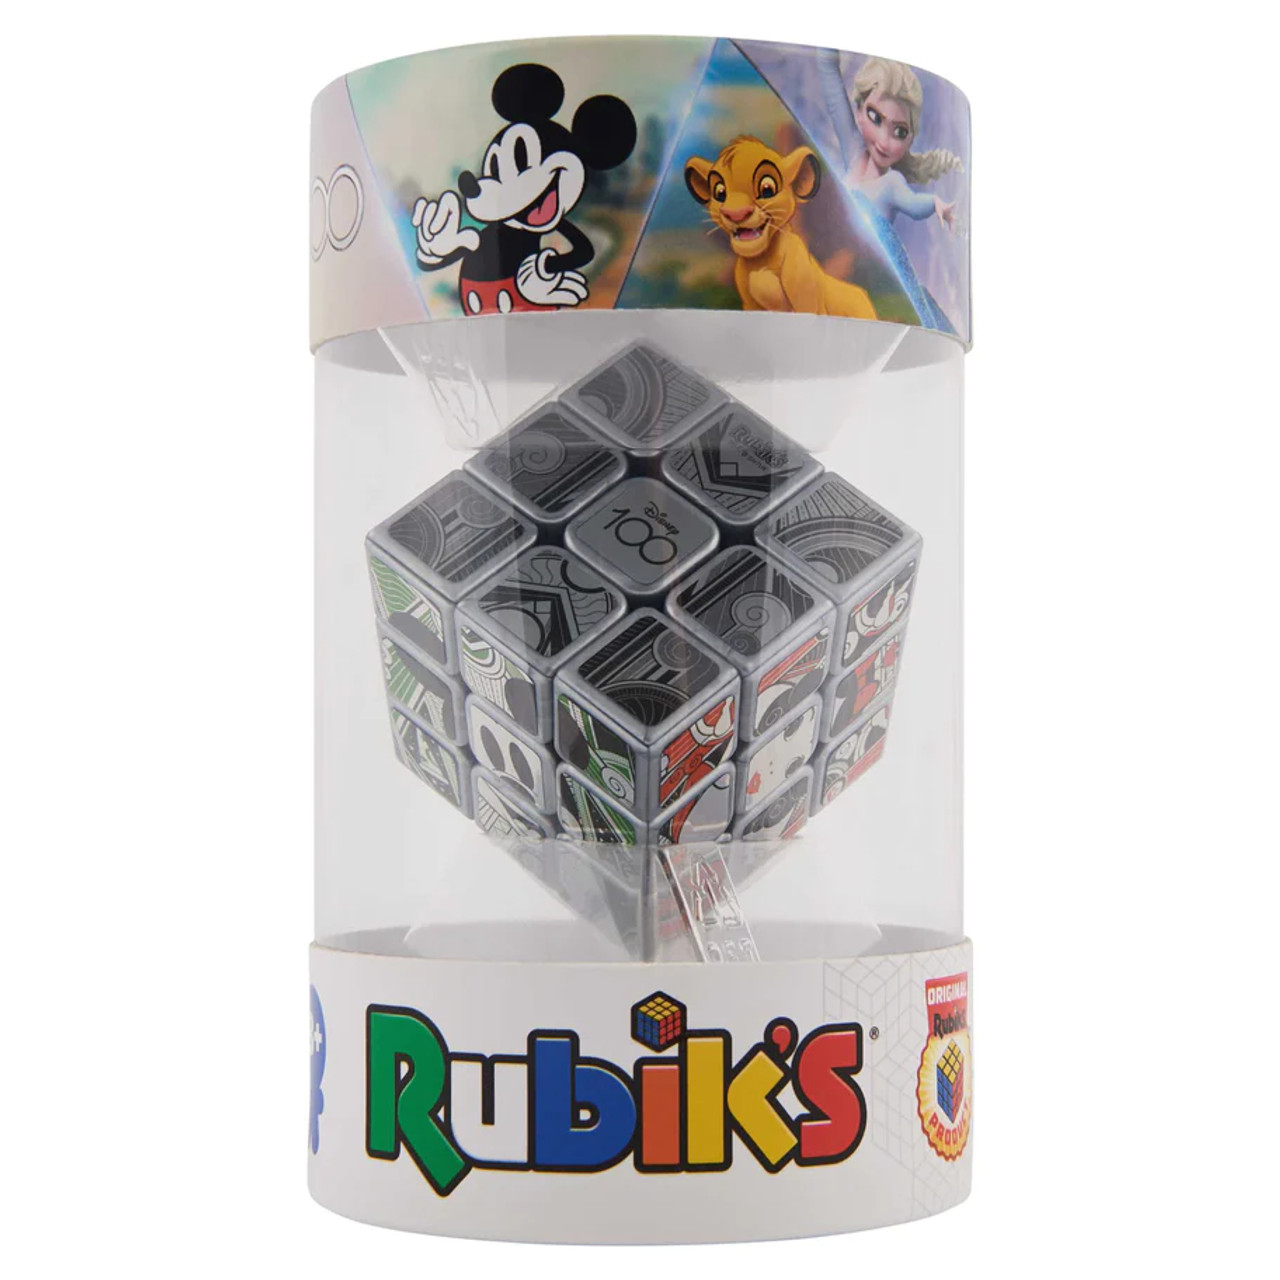 Rubik's Cube, Disney 100th Anniversary